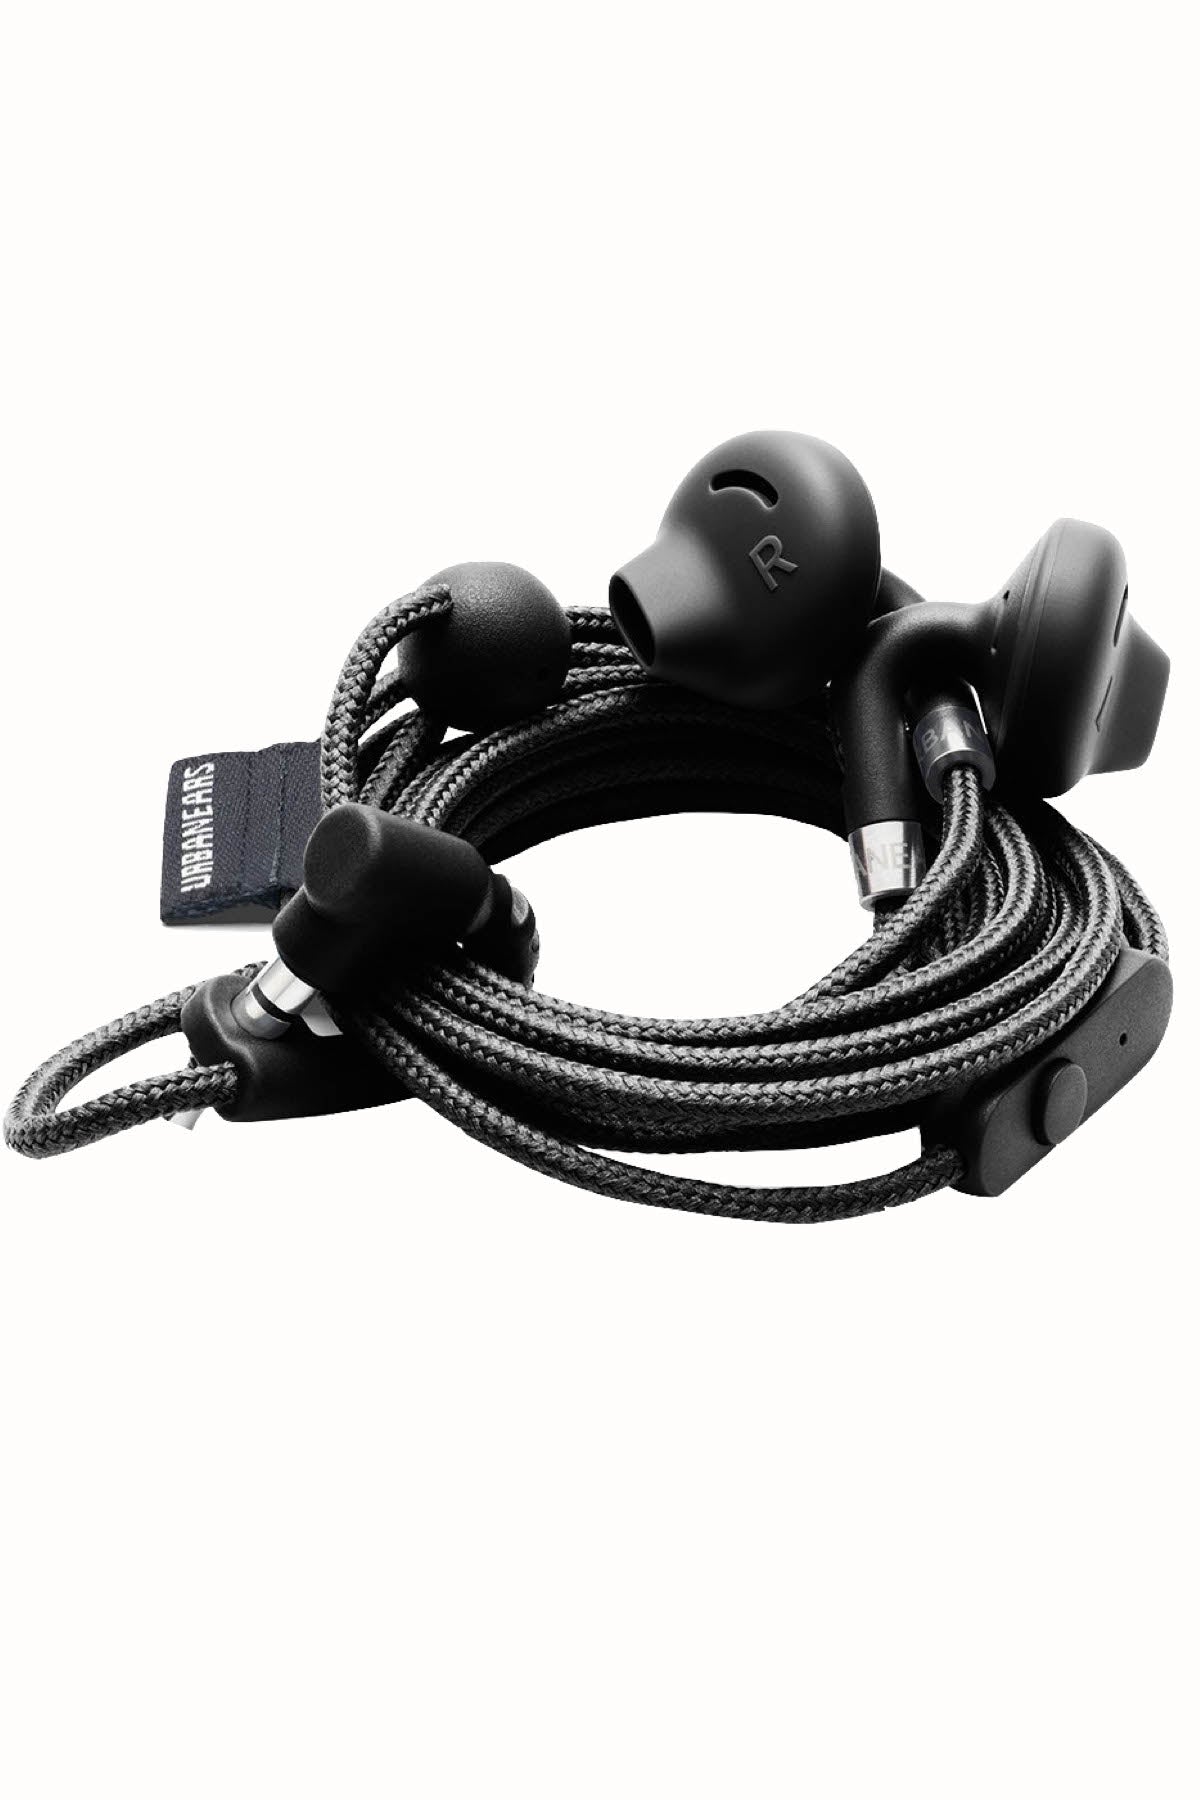 UrbanEars Black Sumpan Earbuds w/ Microphone & Remote